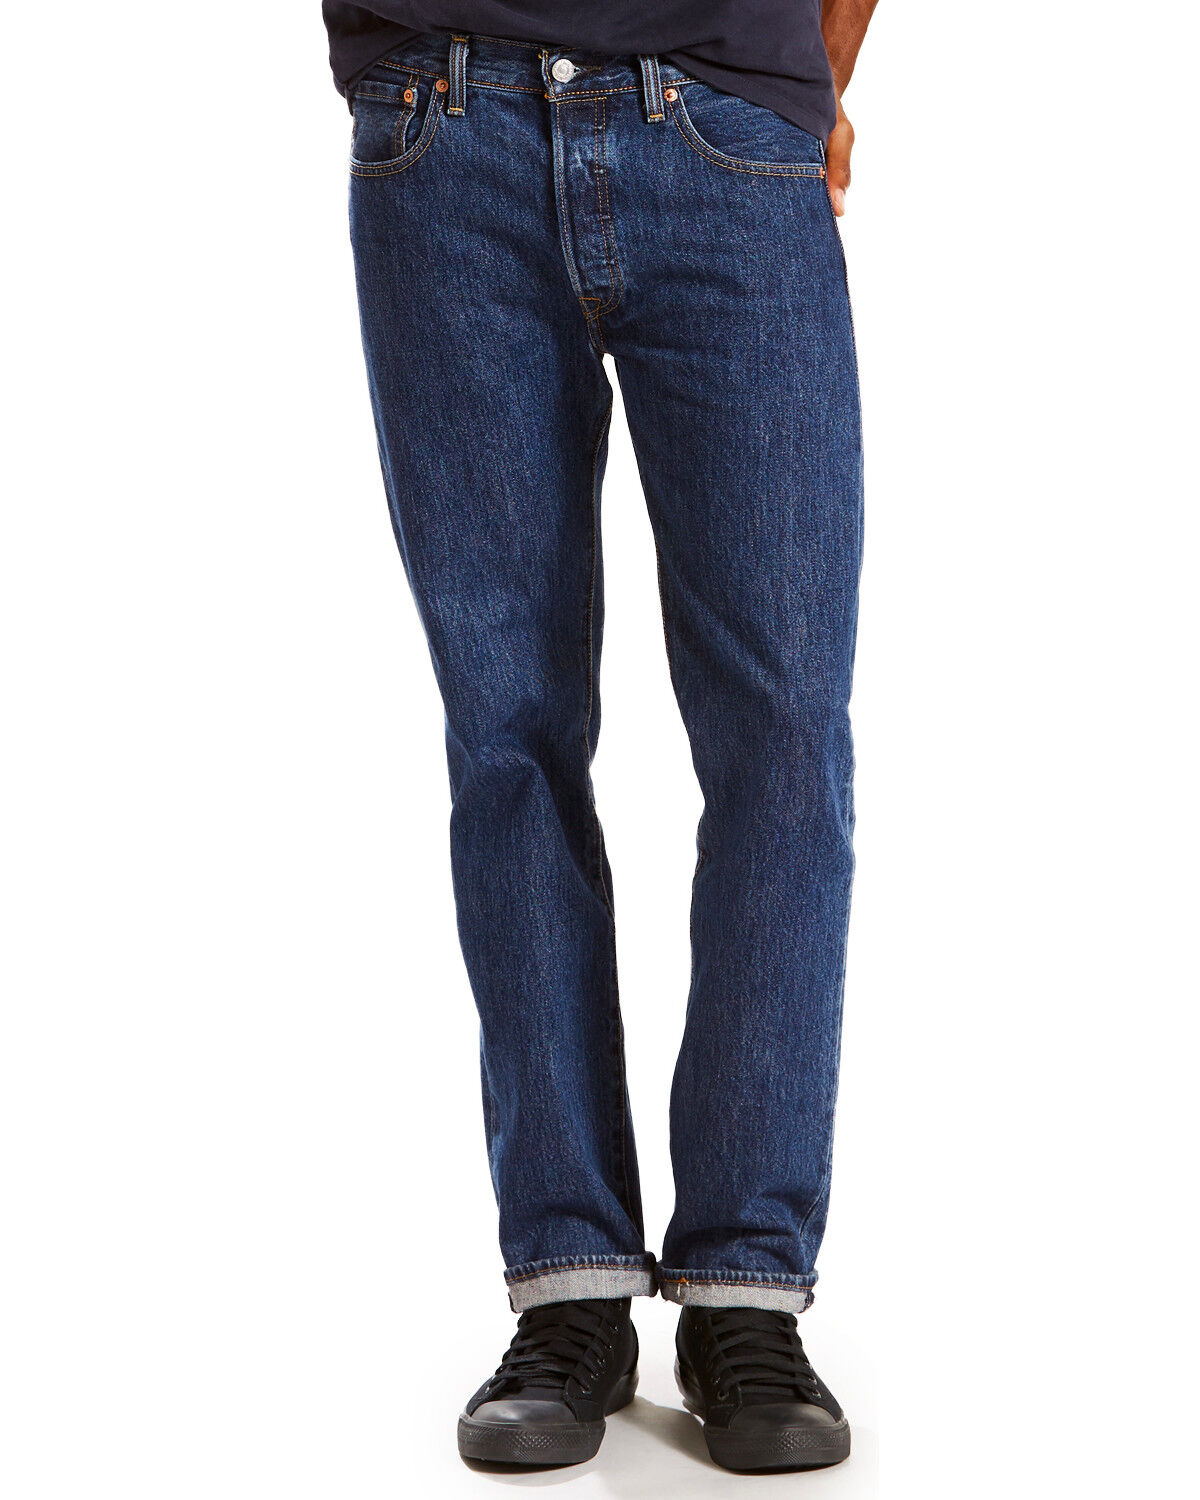 levi 501 dark blue jeans